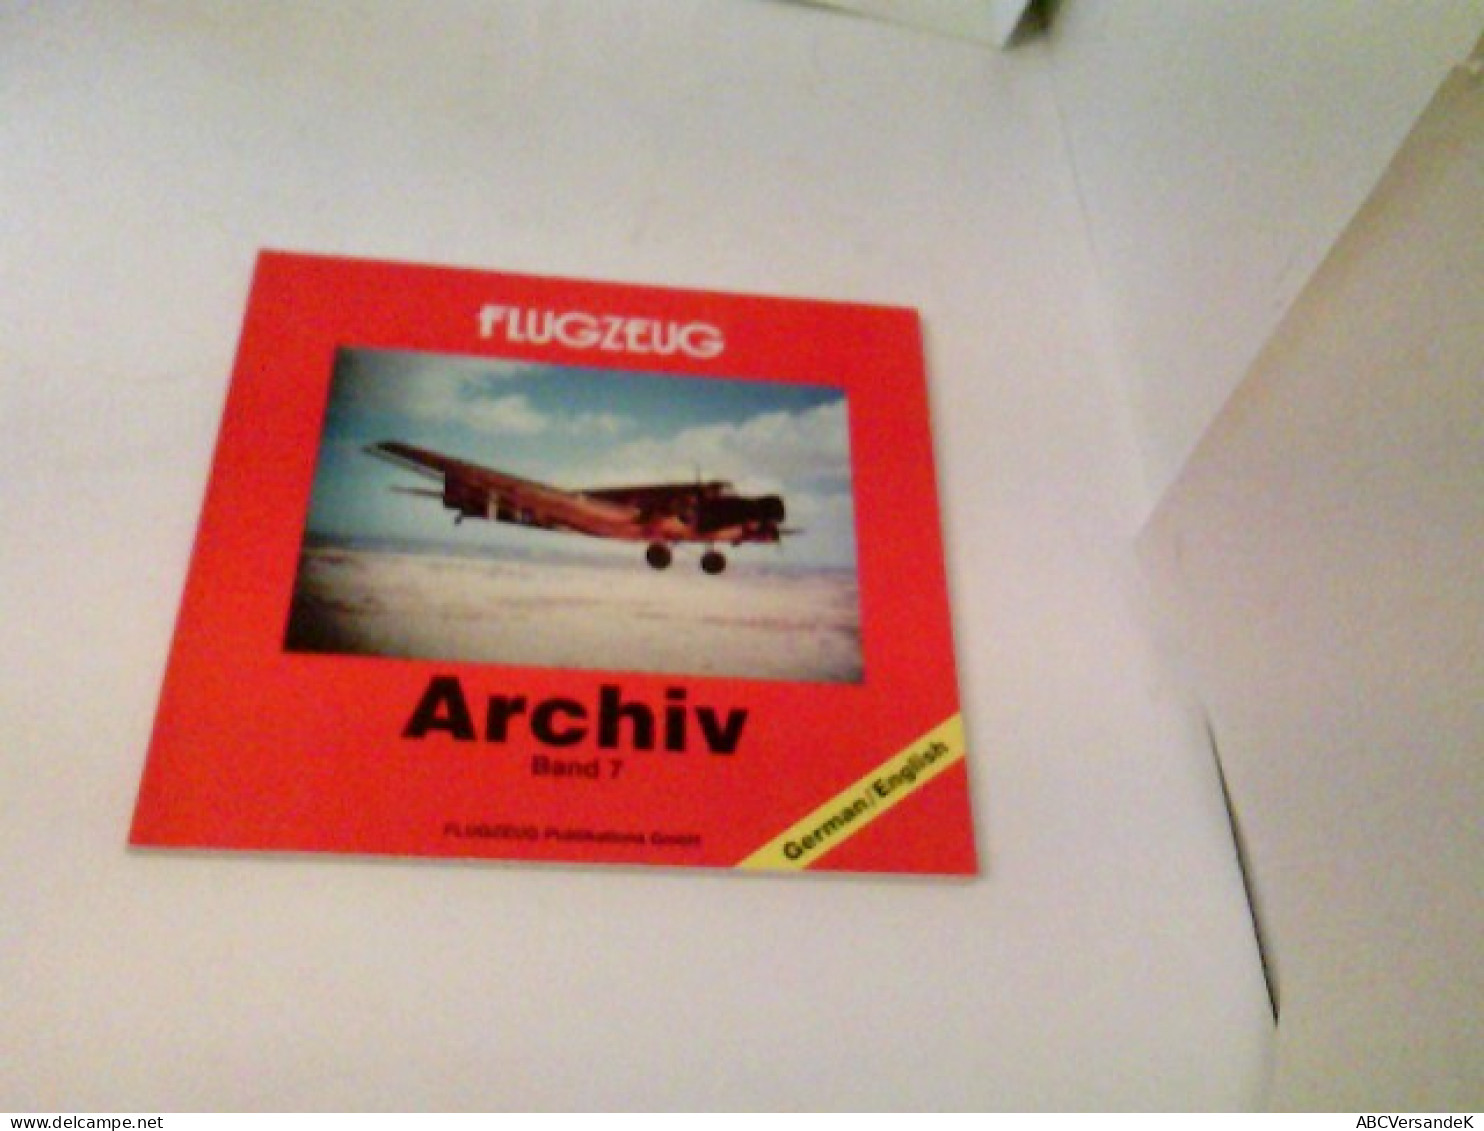 Flugzeug Archiv Band 7 - Trasporti